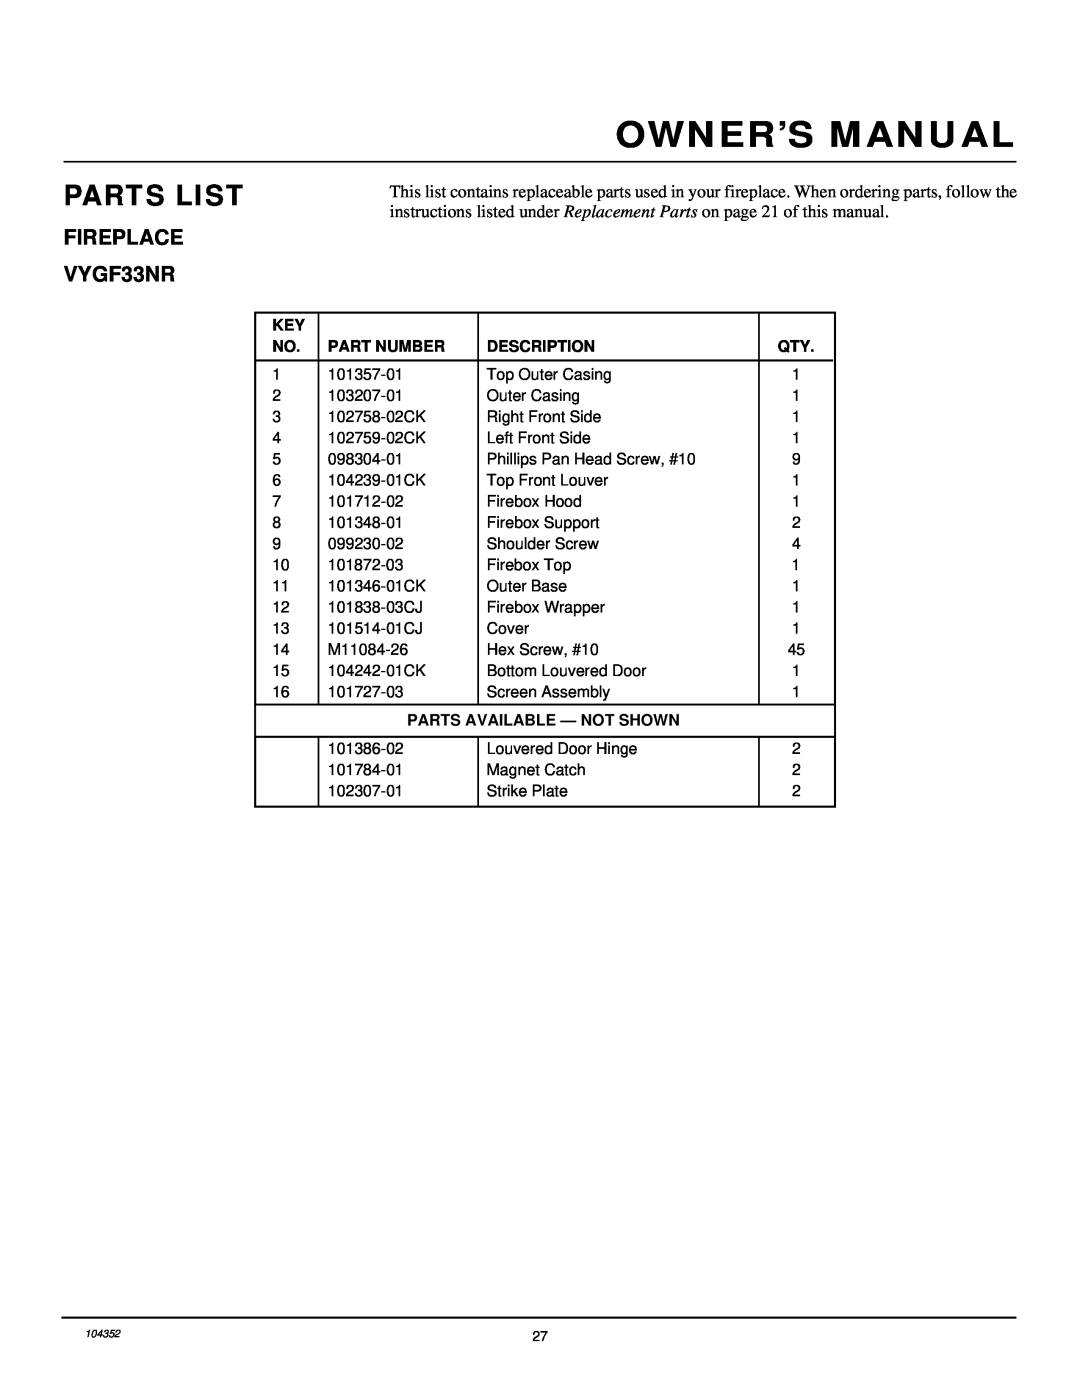 Desa installation manual Parts List, FIREPLACE VYGF33NR, Part Number, Description, Parts Available - Not Shown 